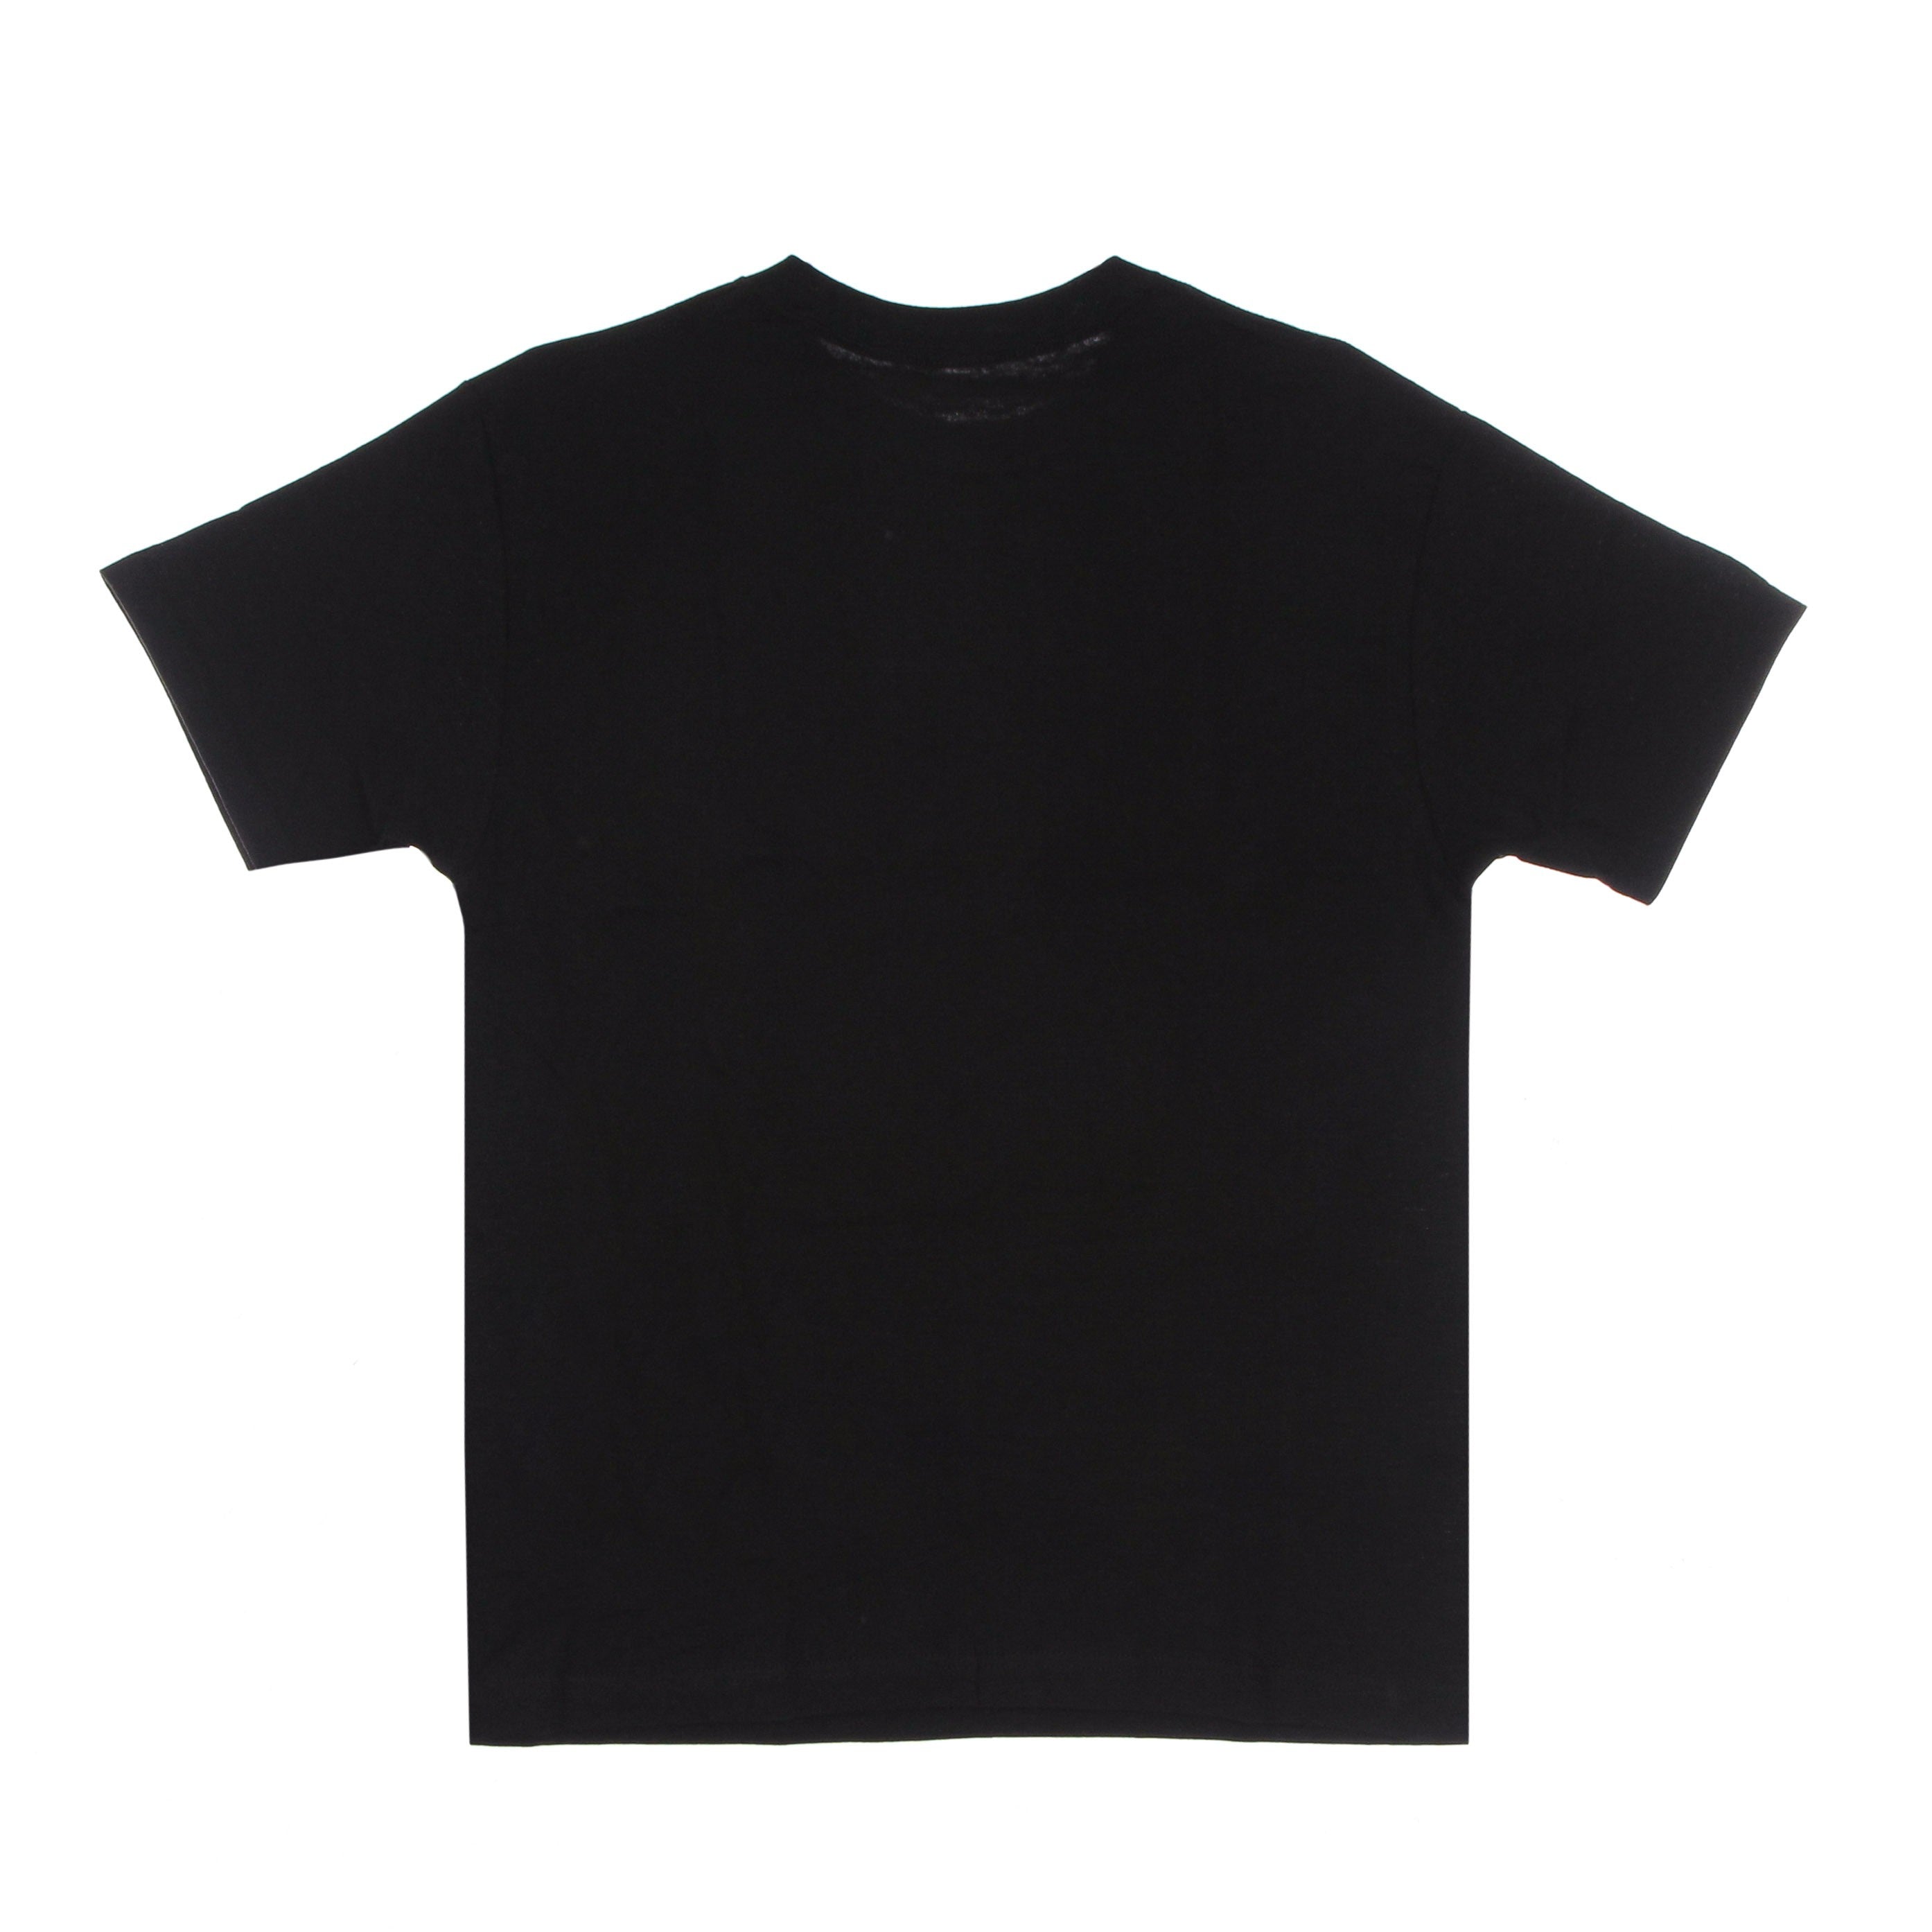 Men's Saints Tee Black T-Shirt